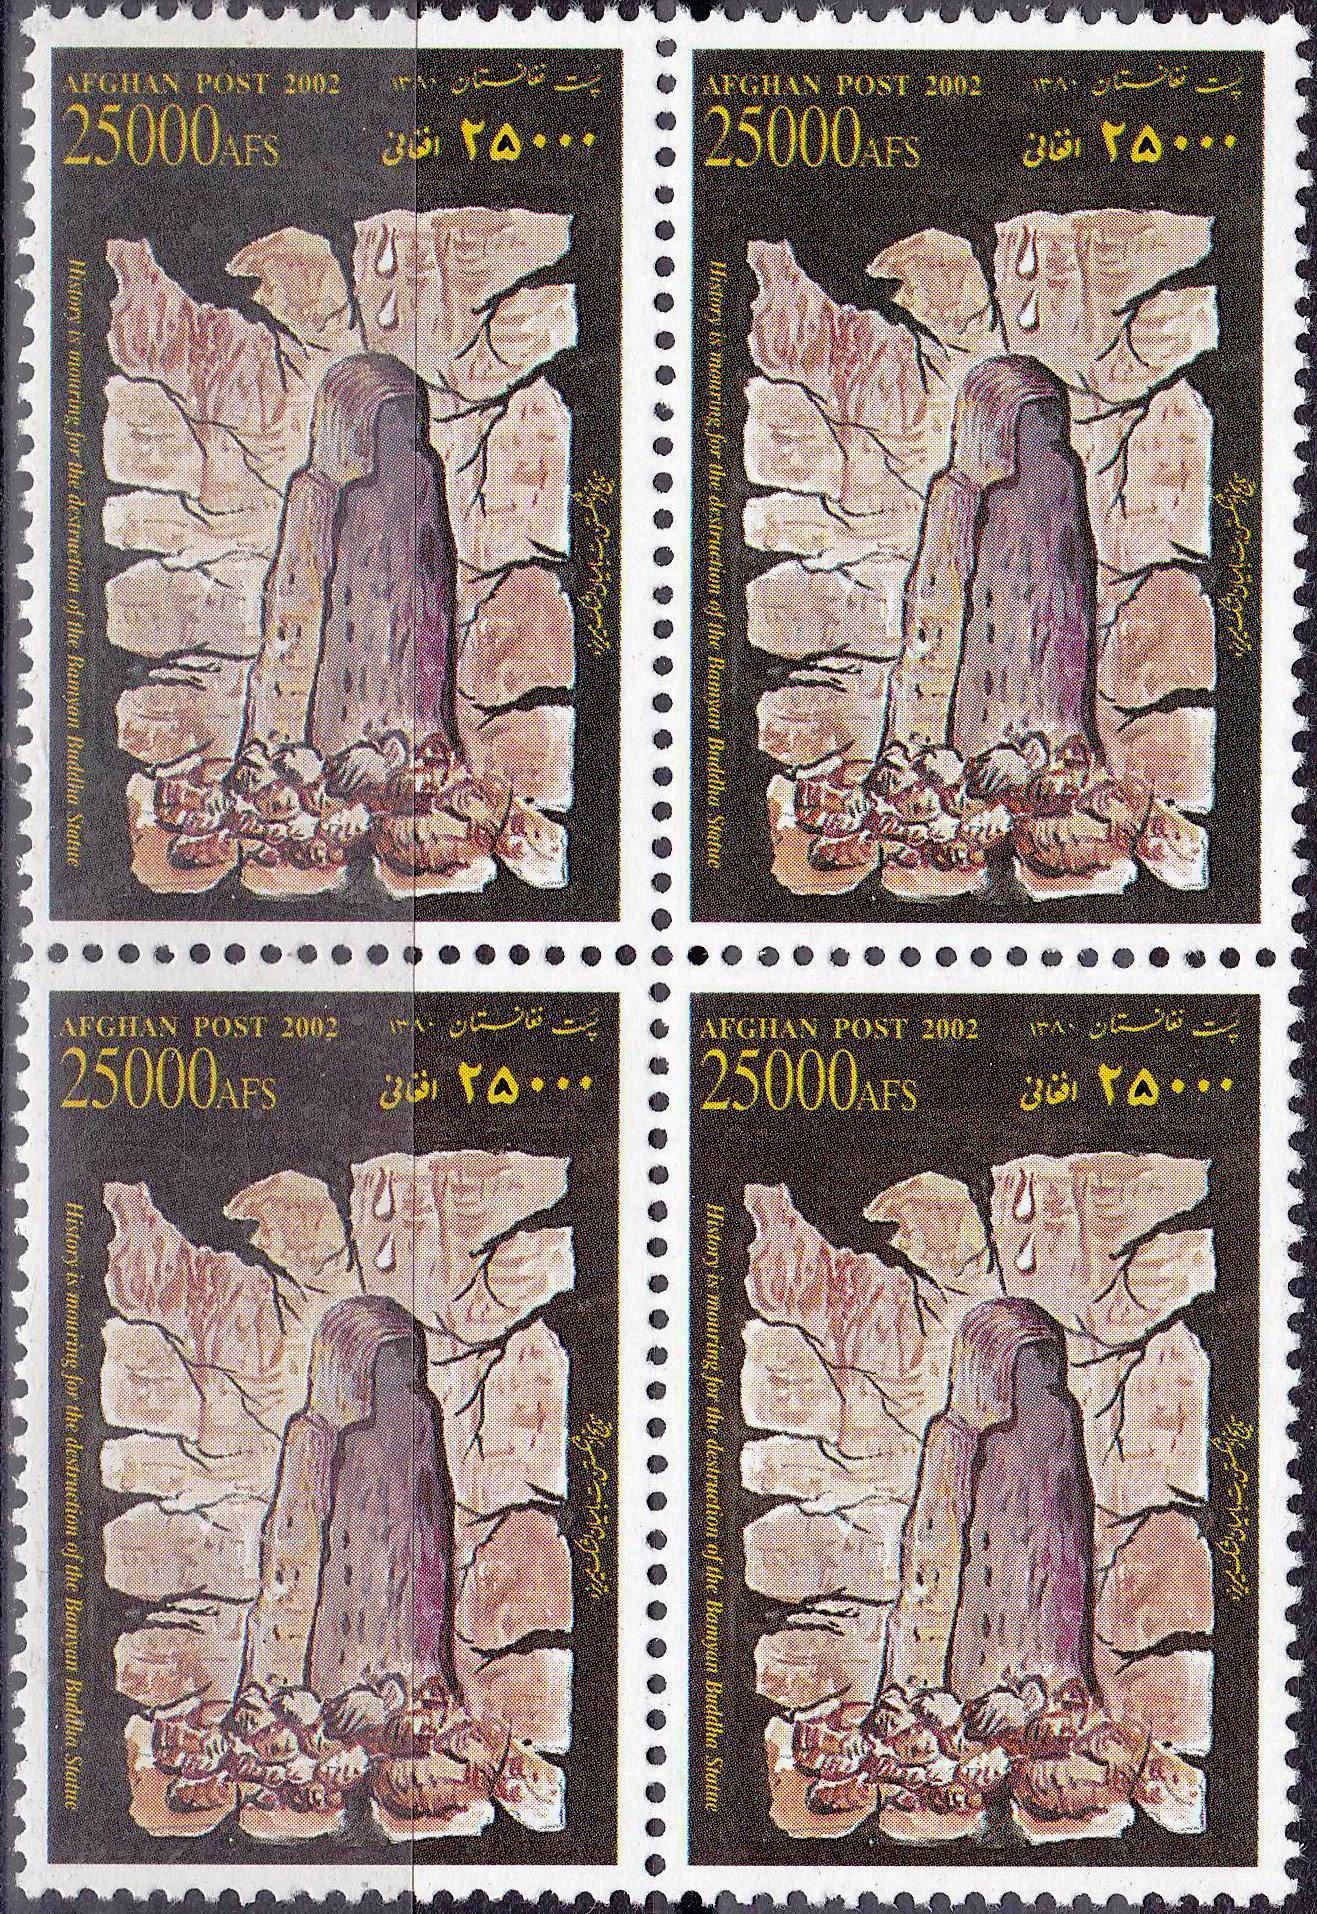 Afghanistan 2002 Stamps Destruction Buddha Bamiyan By Taliban